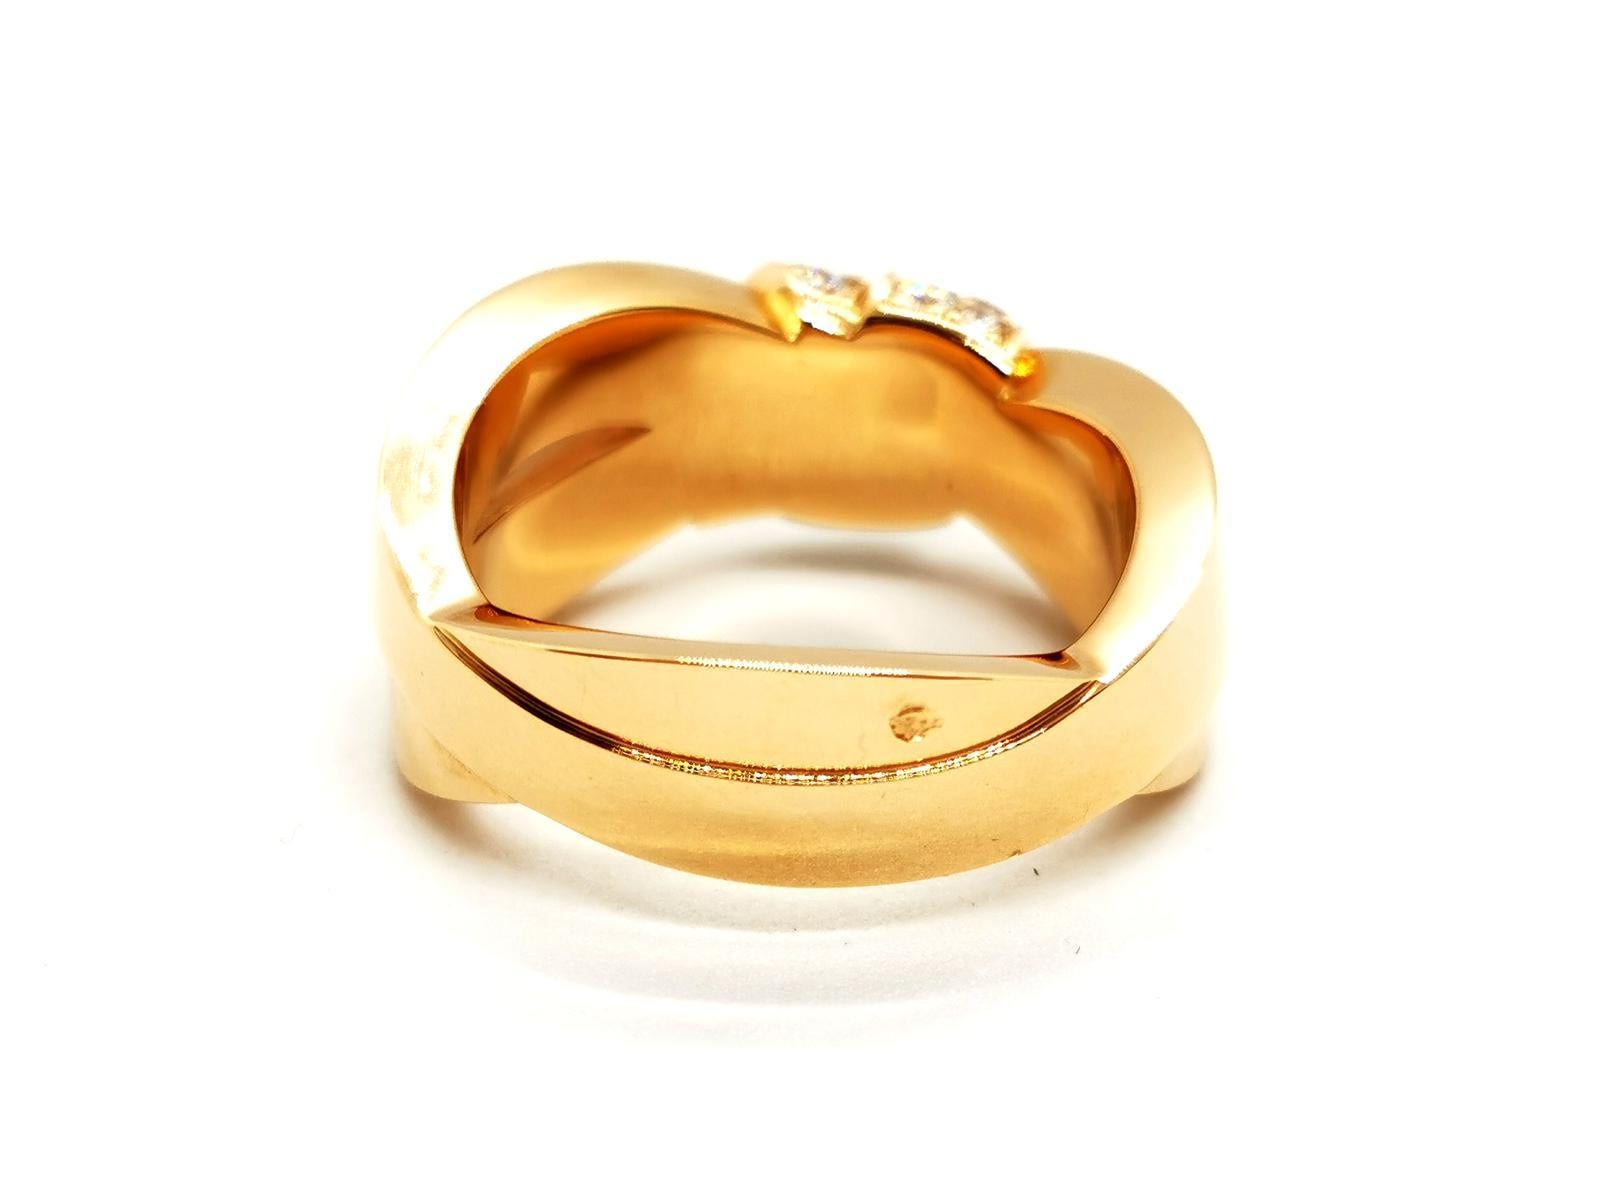 Brilliant Cut Chaumet Ring Liens Rose GoldDiamond For Sale